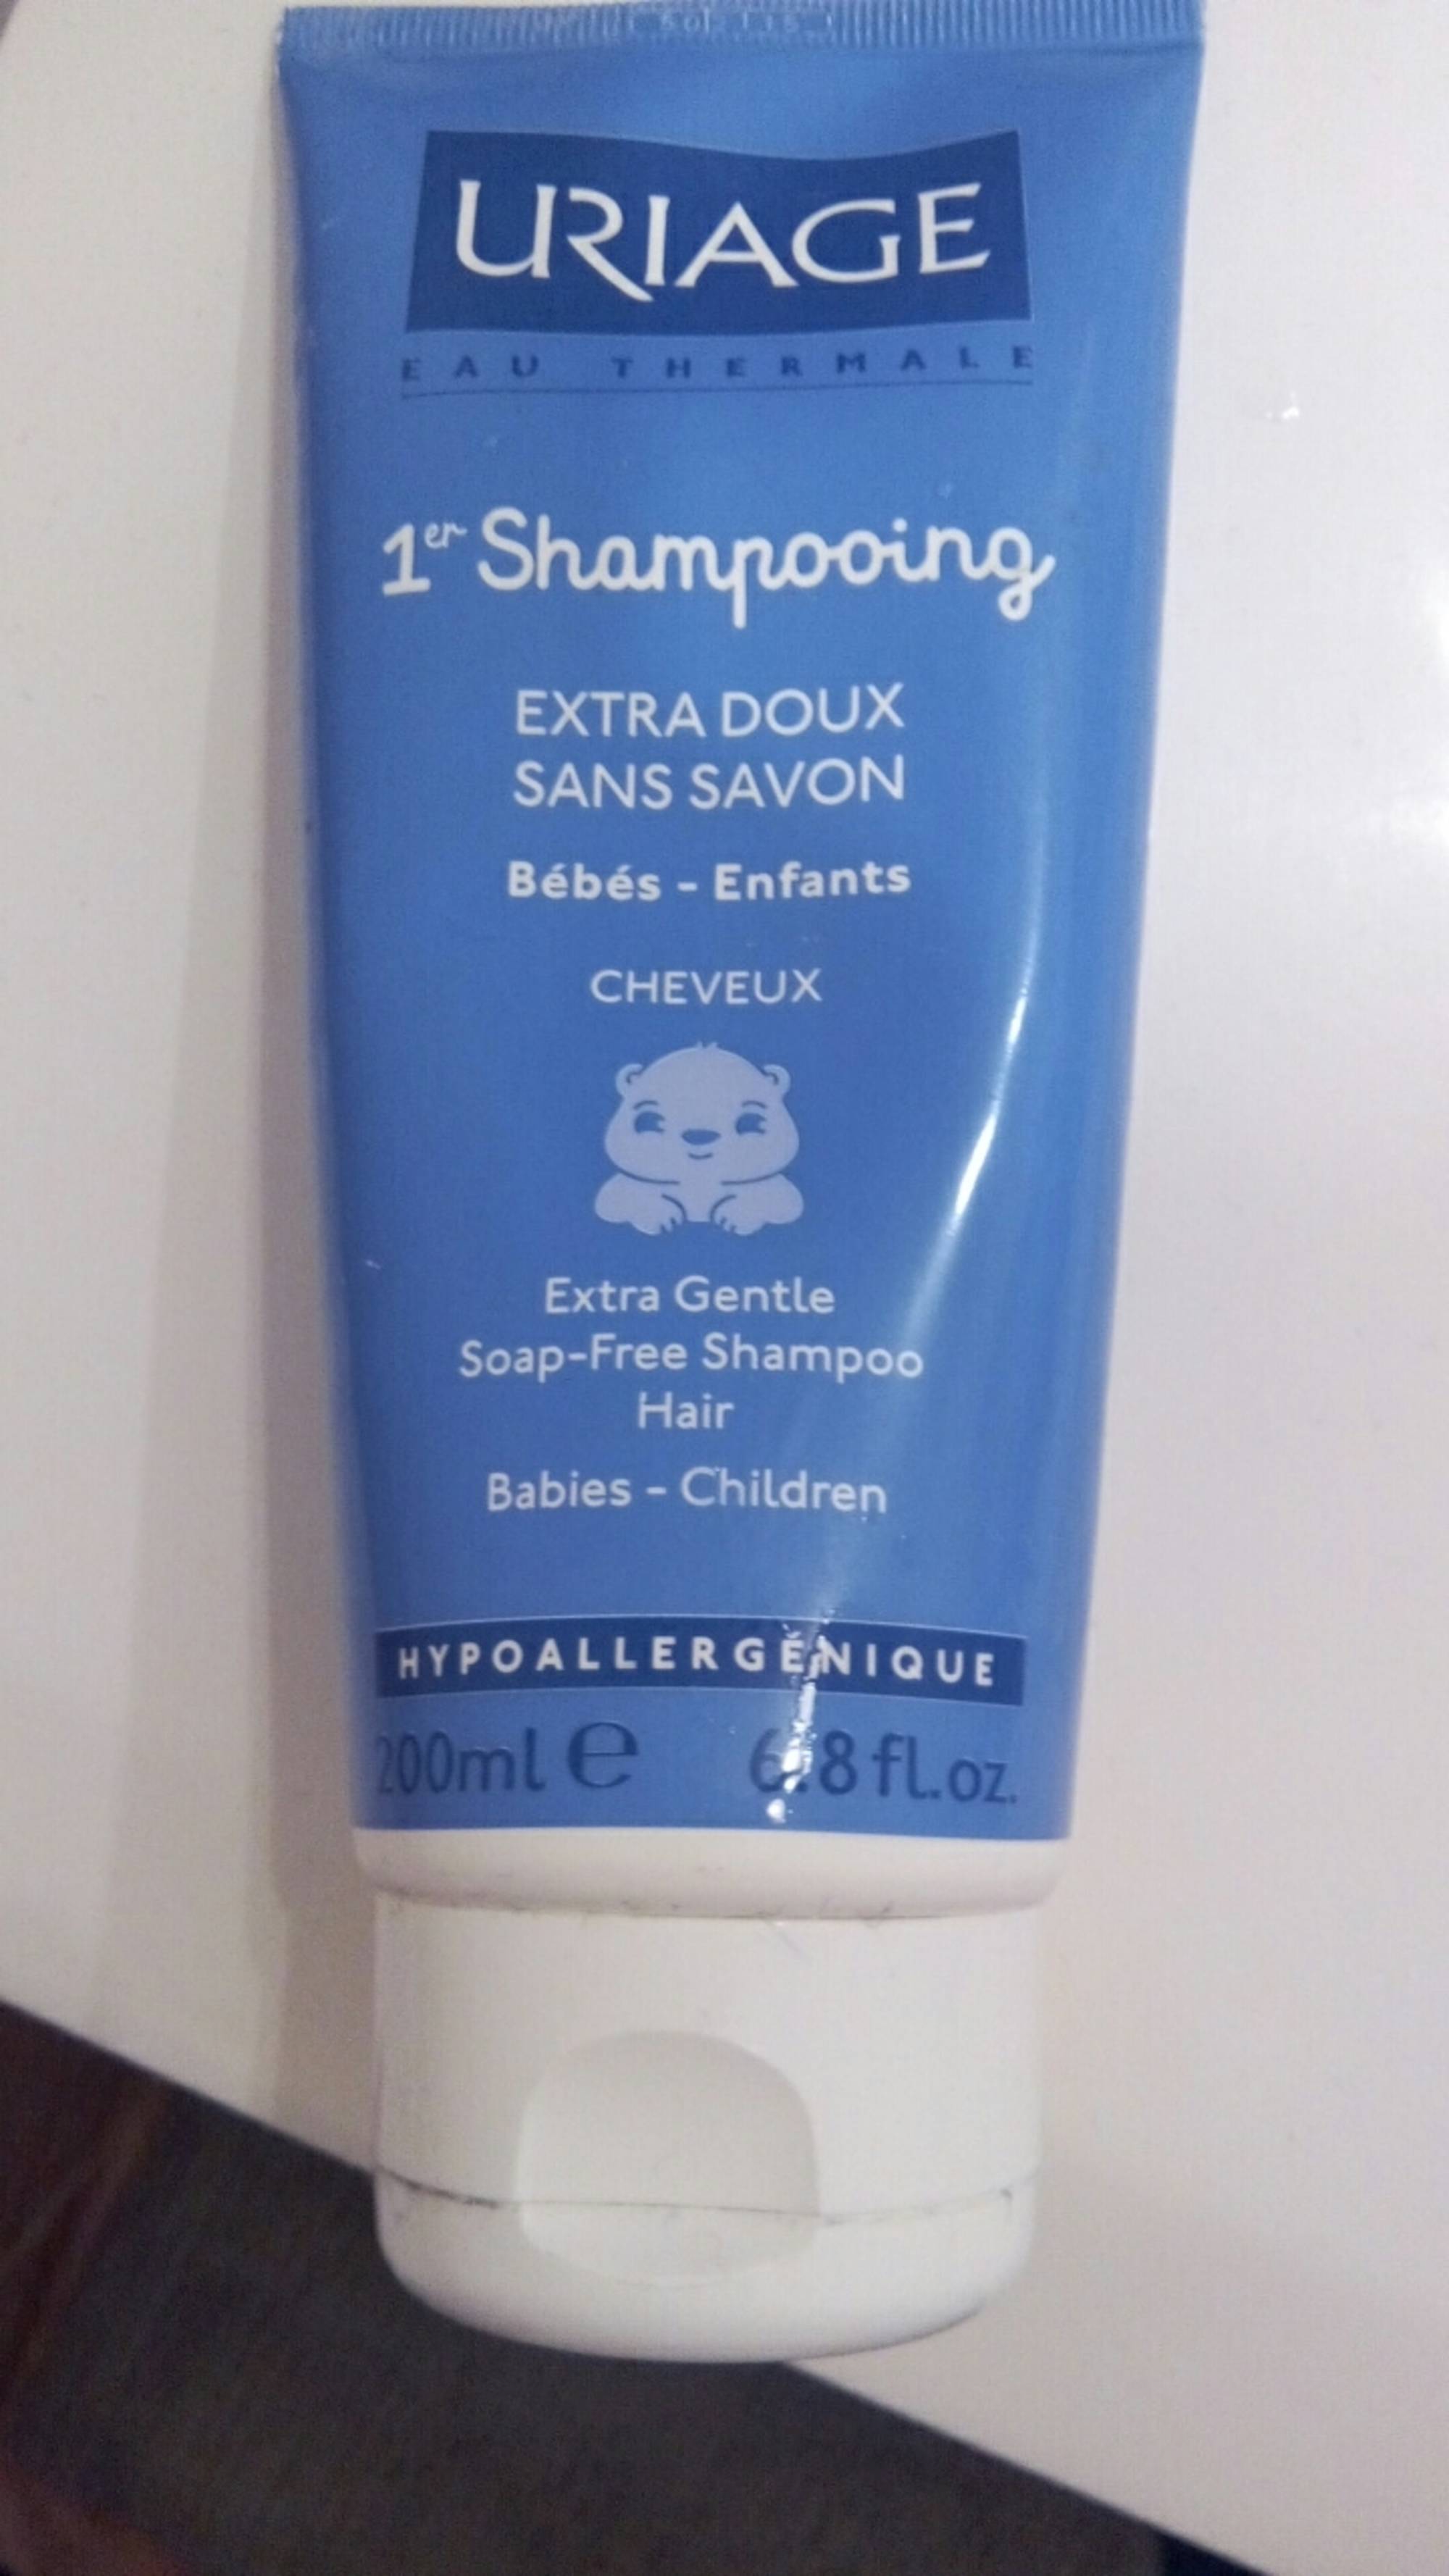 URIAGE - 1er shampooing extra doux sans savon